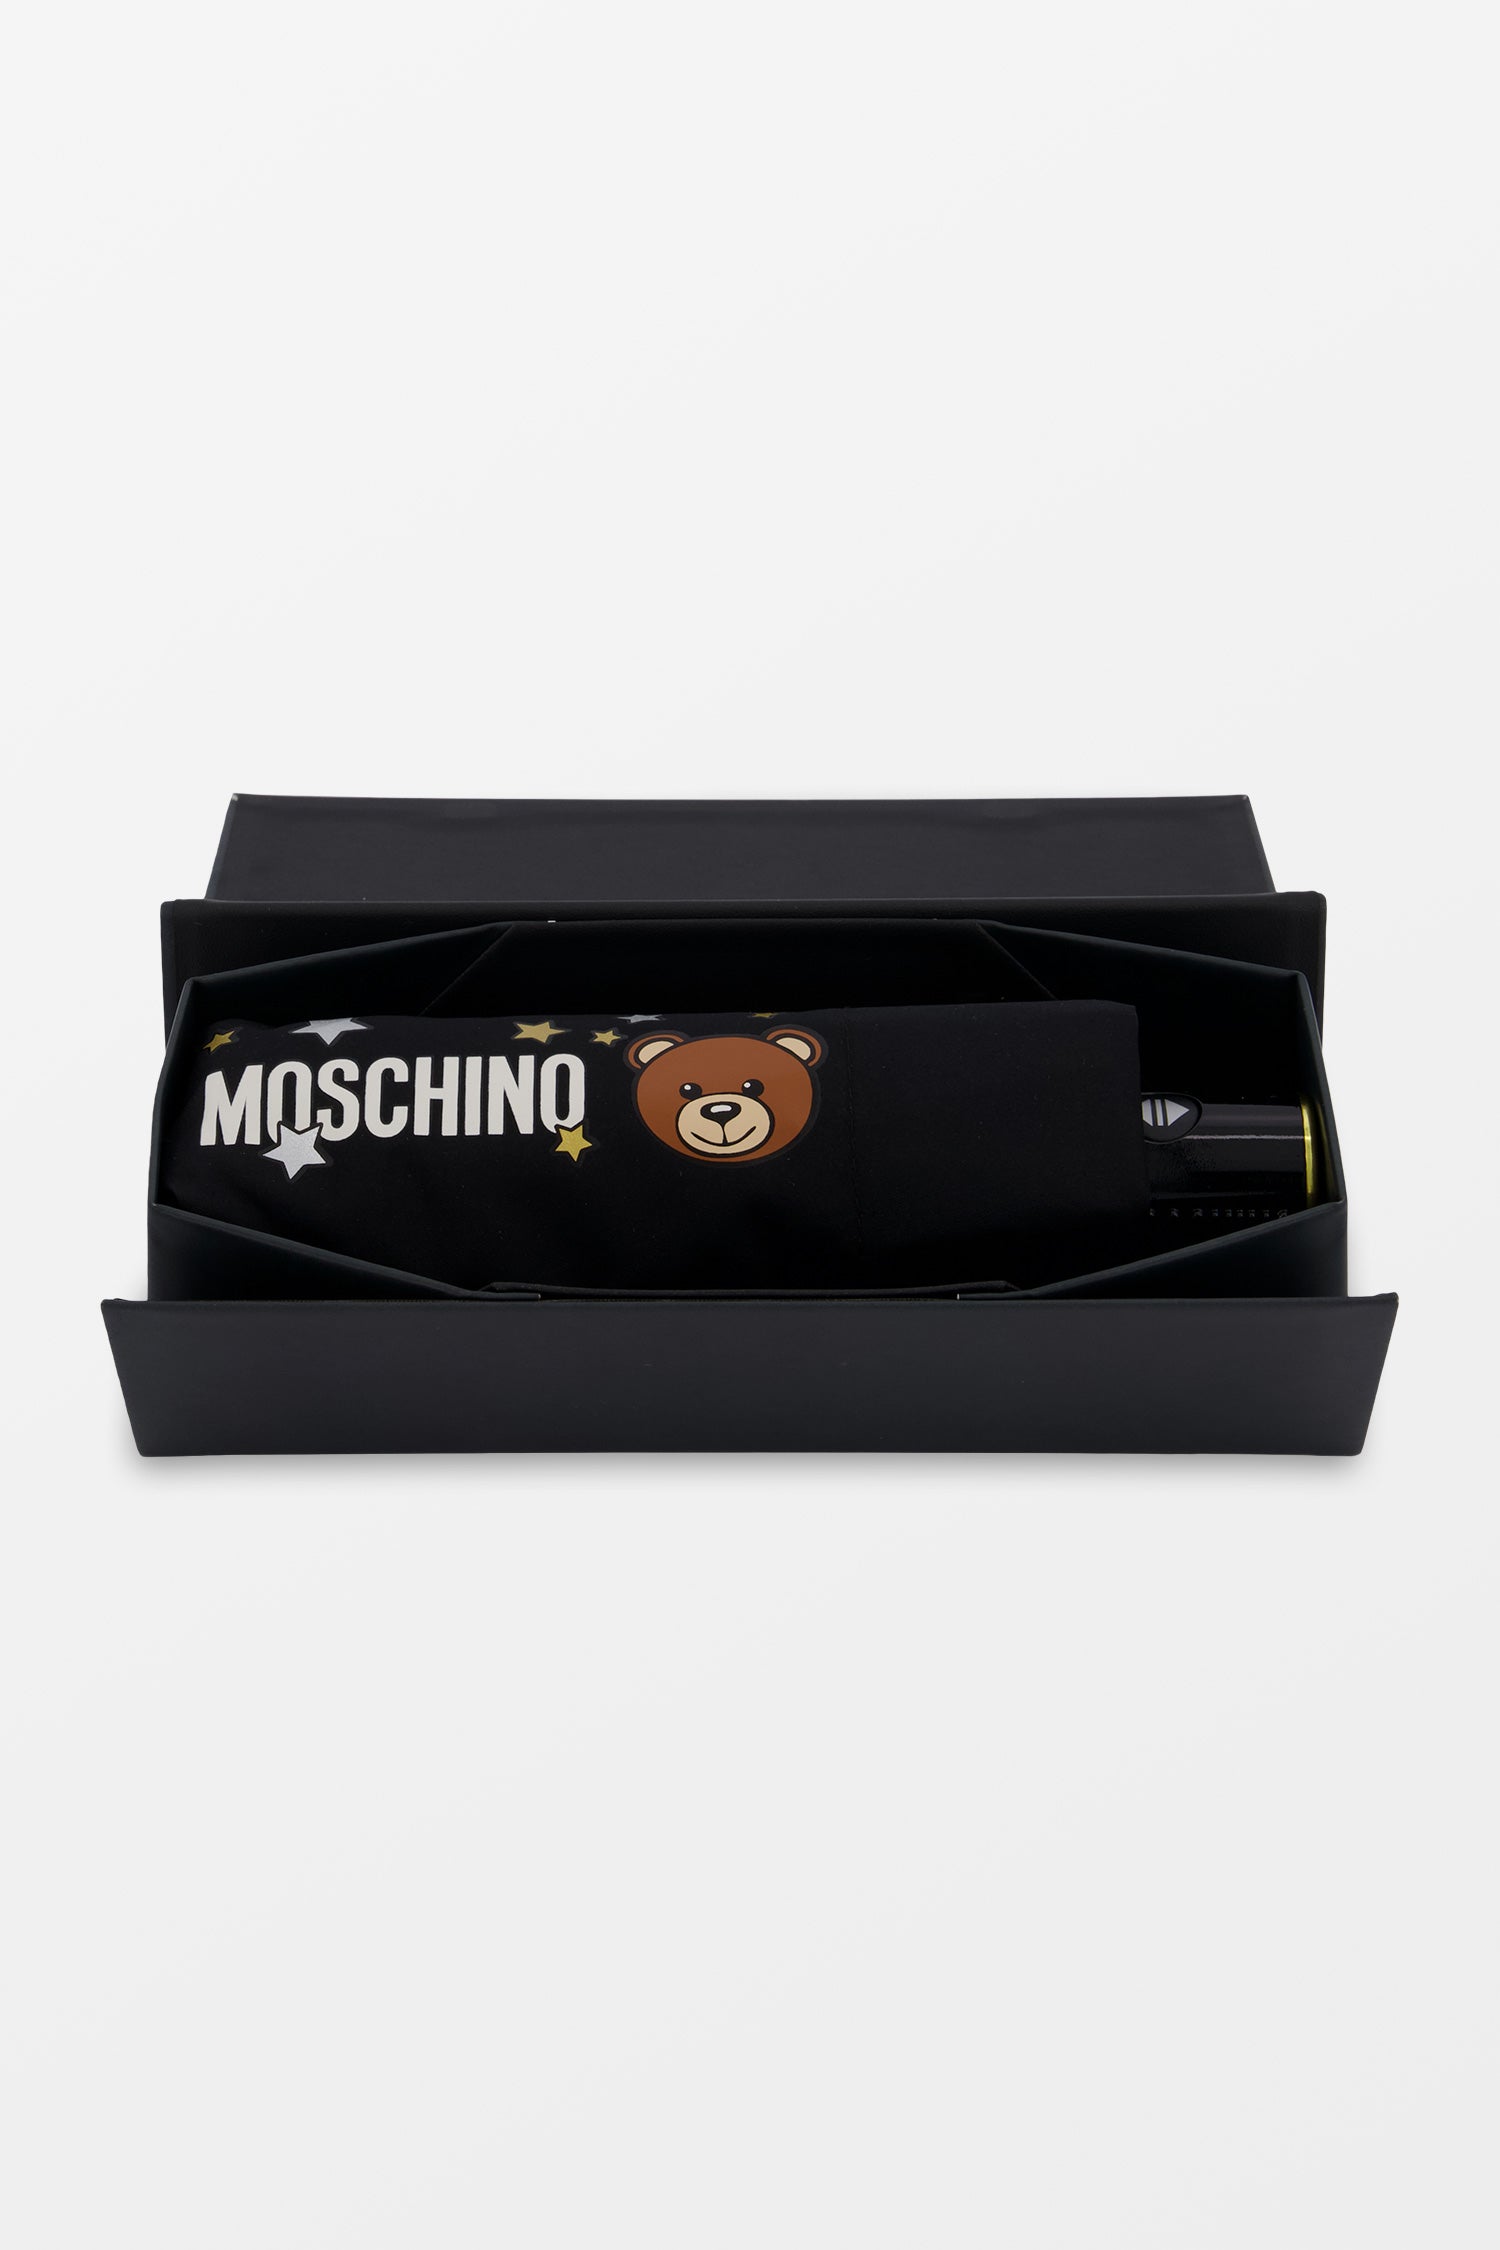 Moschino Toy Stars Compact Black Umbrella